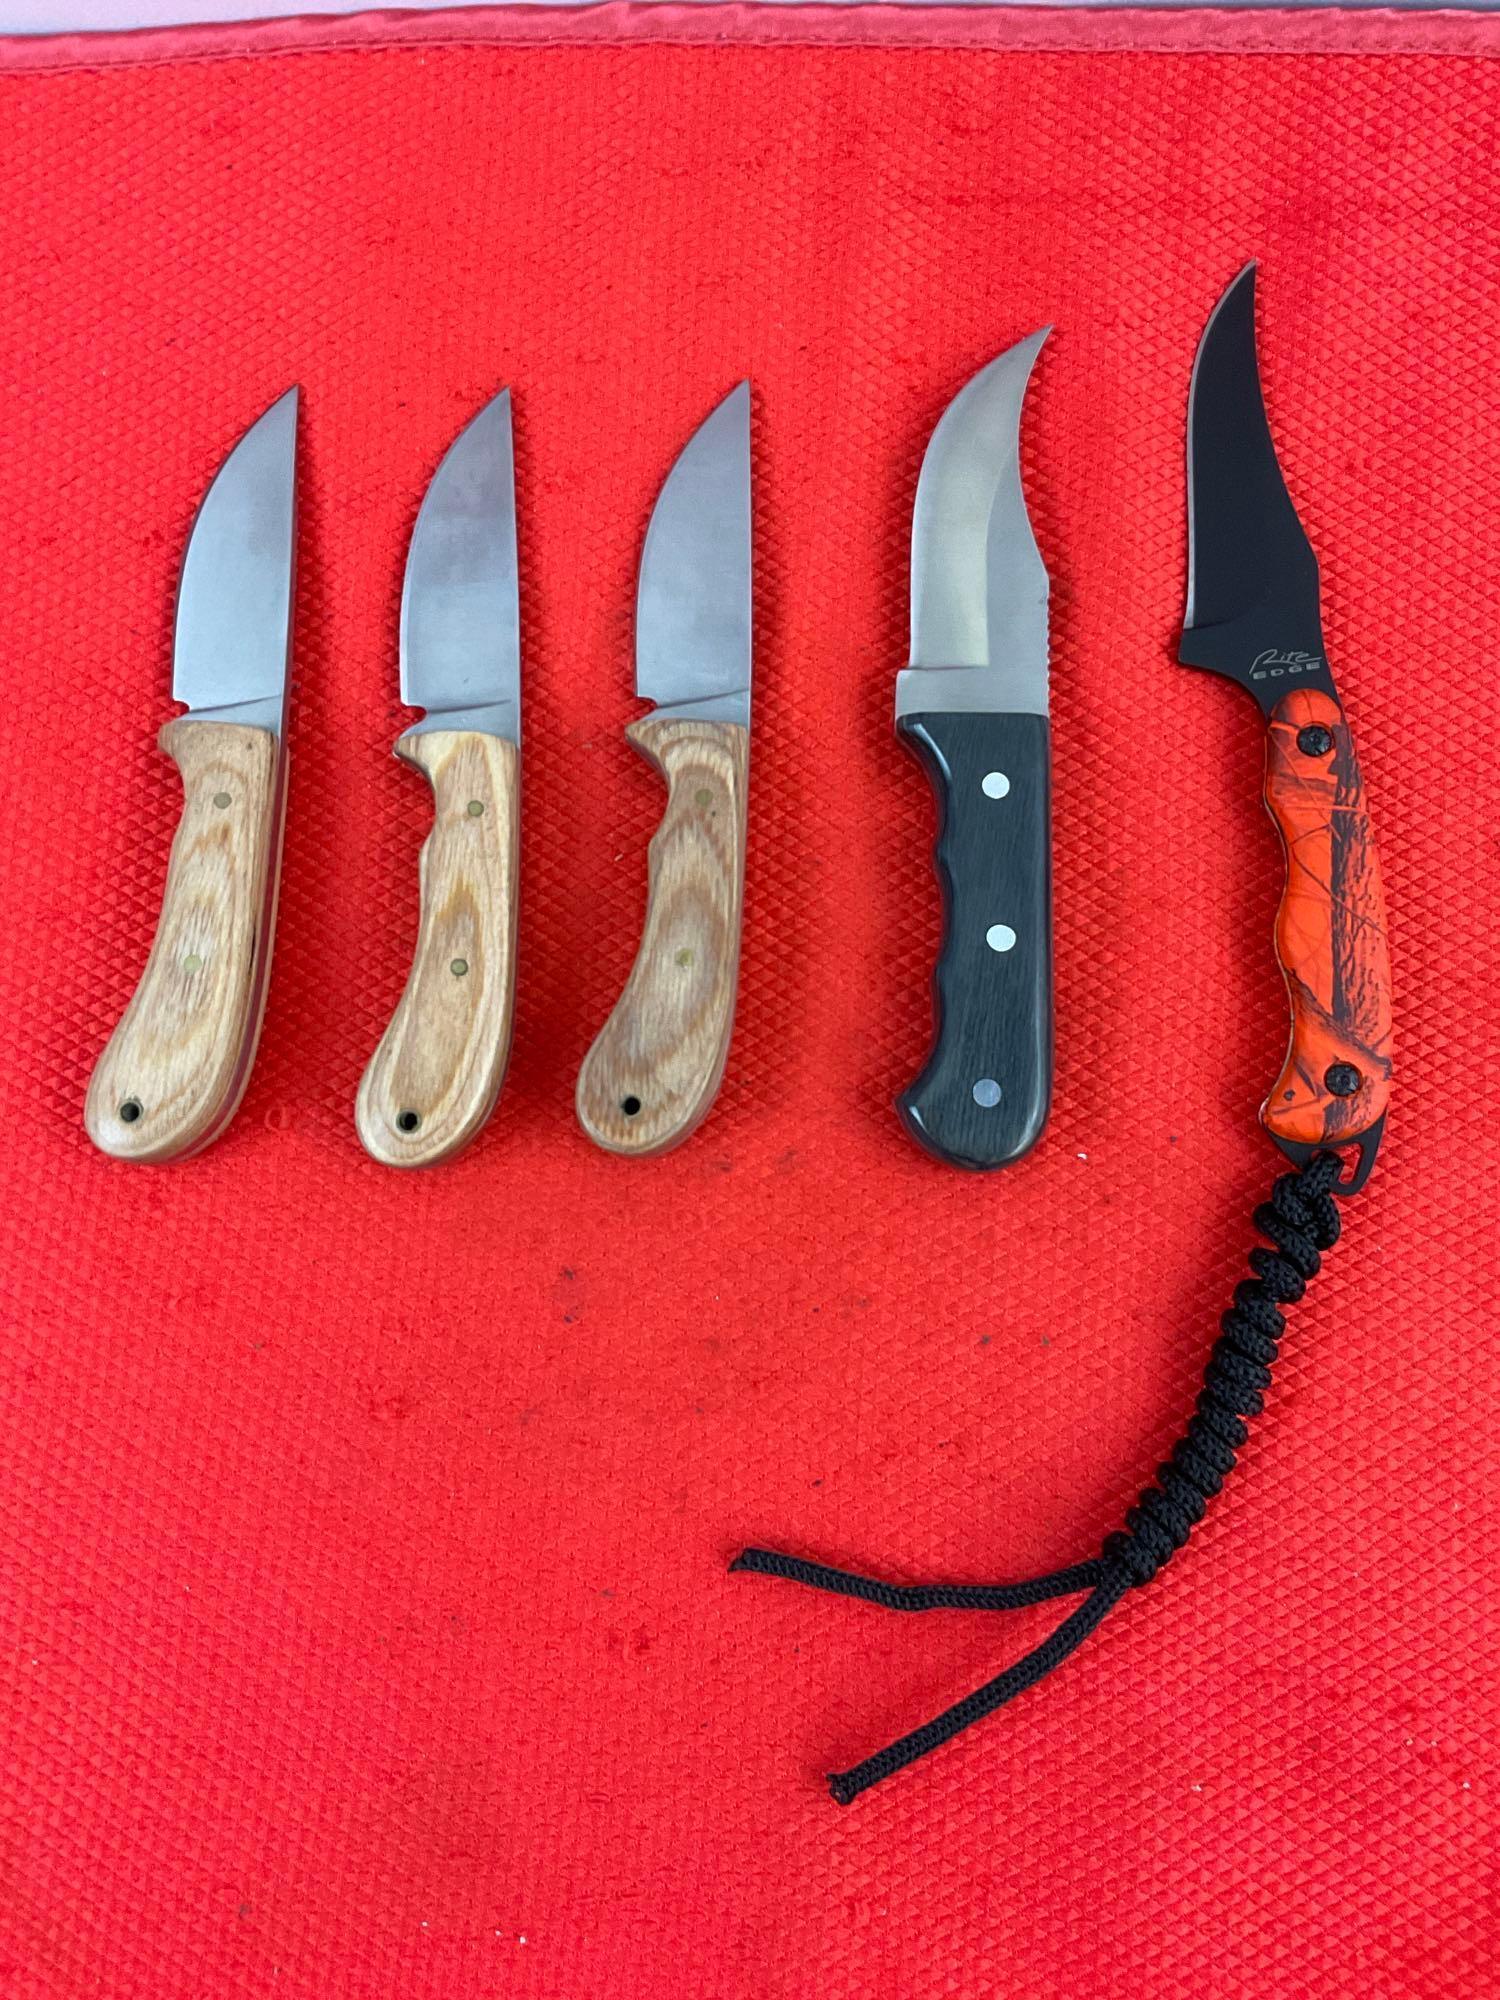 5 pcs Modern Steel Fixed Blade Hunting Knife Assortment. 1x Rite Edge, 4x Unknown. See pics.